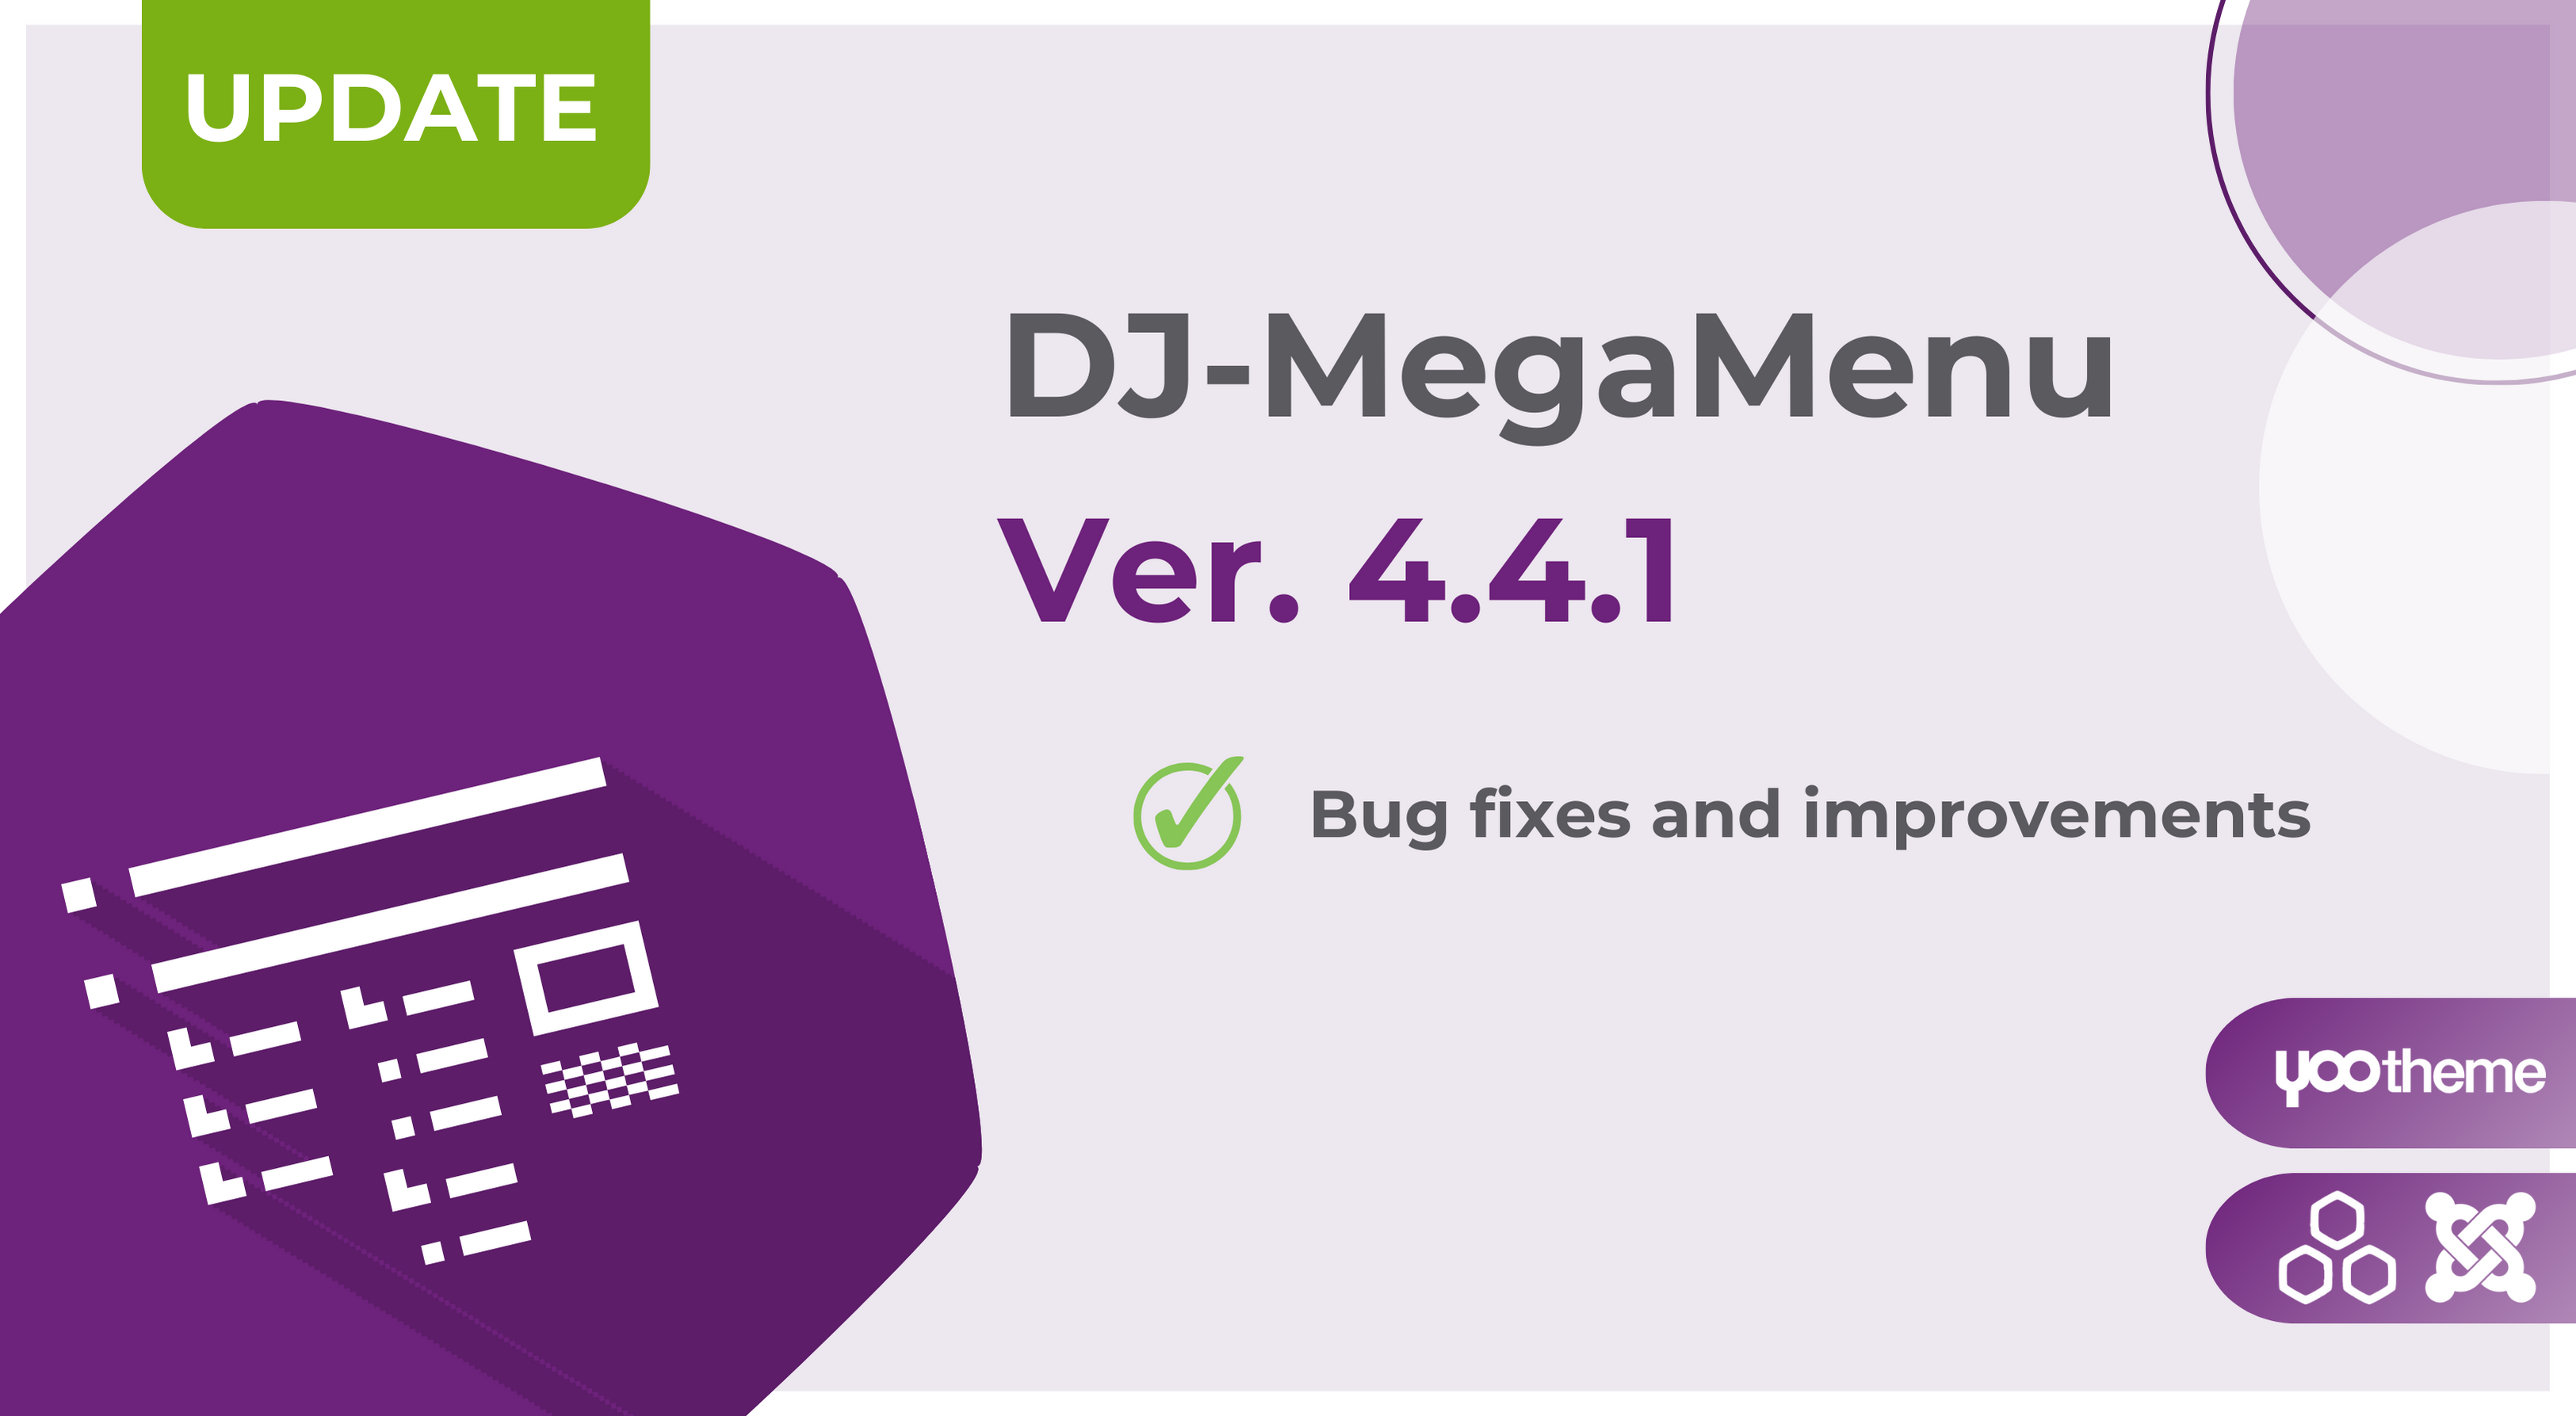 [UPDATE] DJ-MegaMenu version 4.4.1 brings few improvements